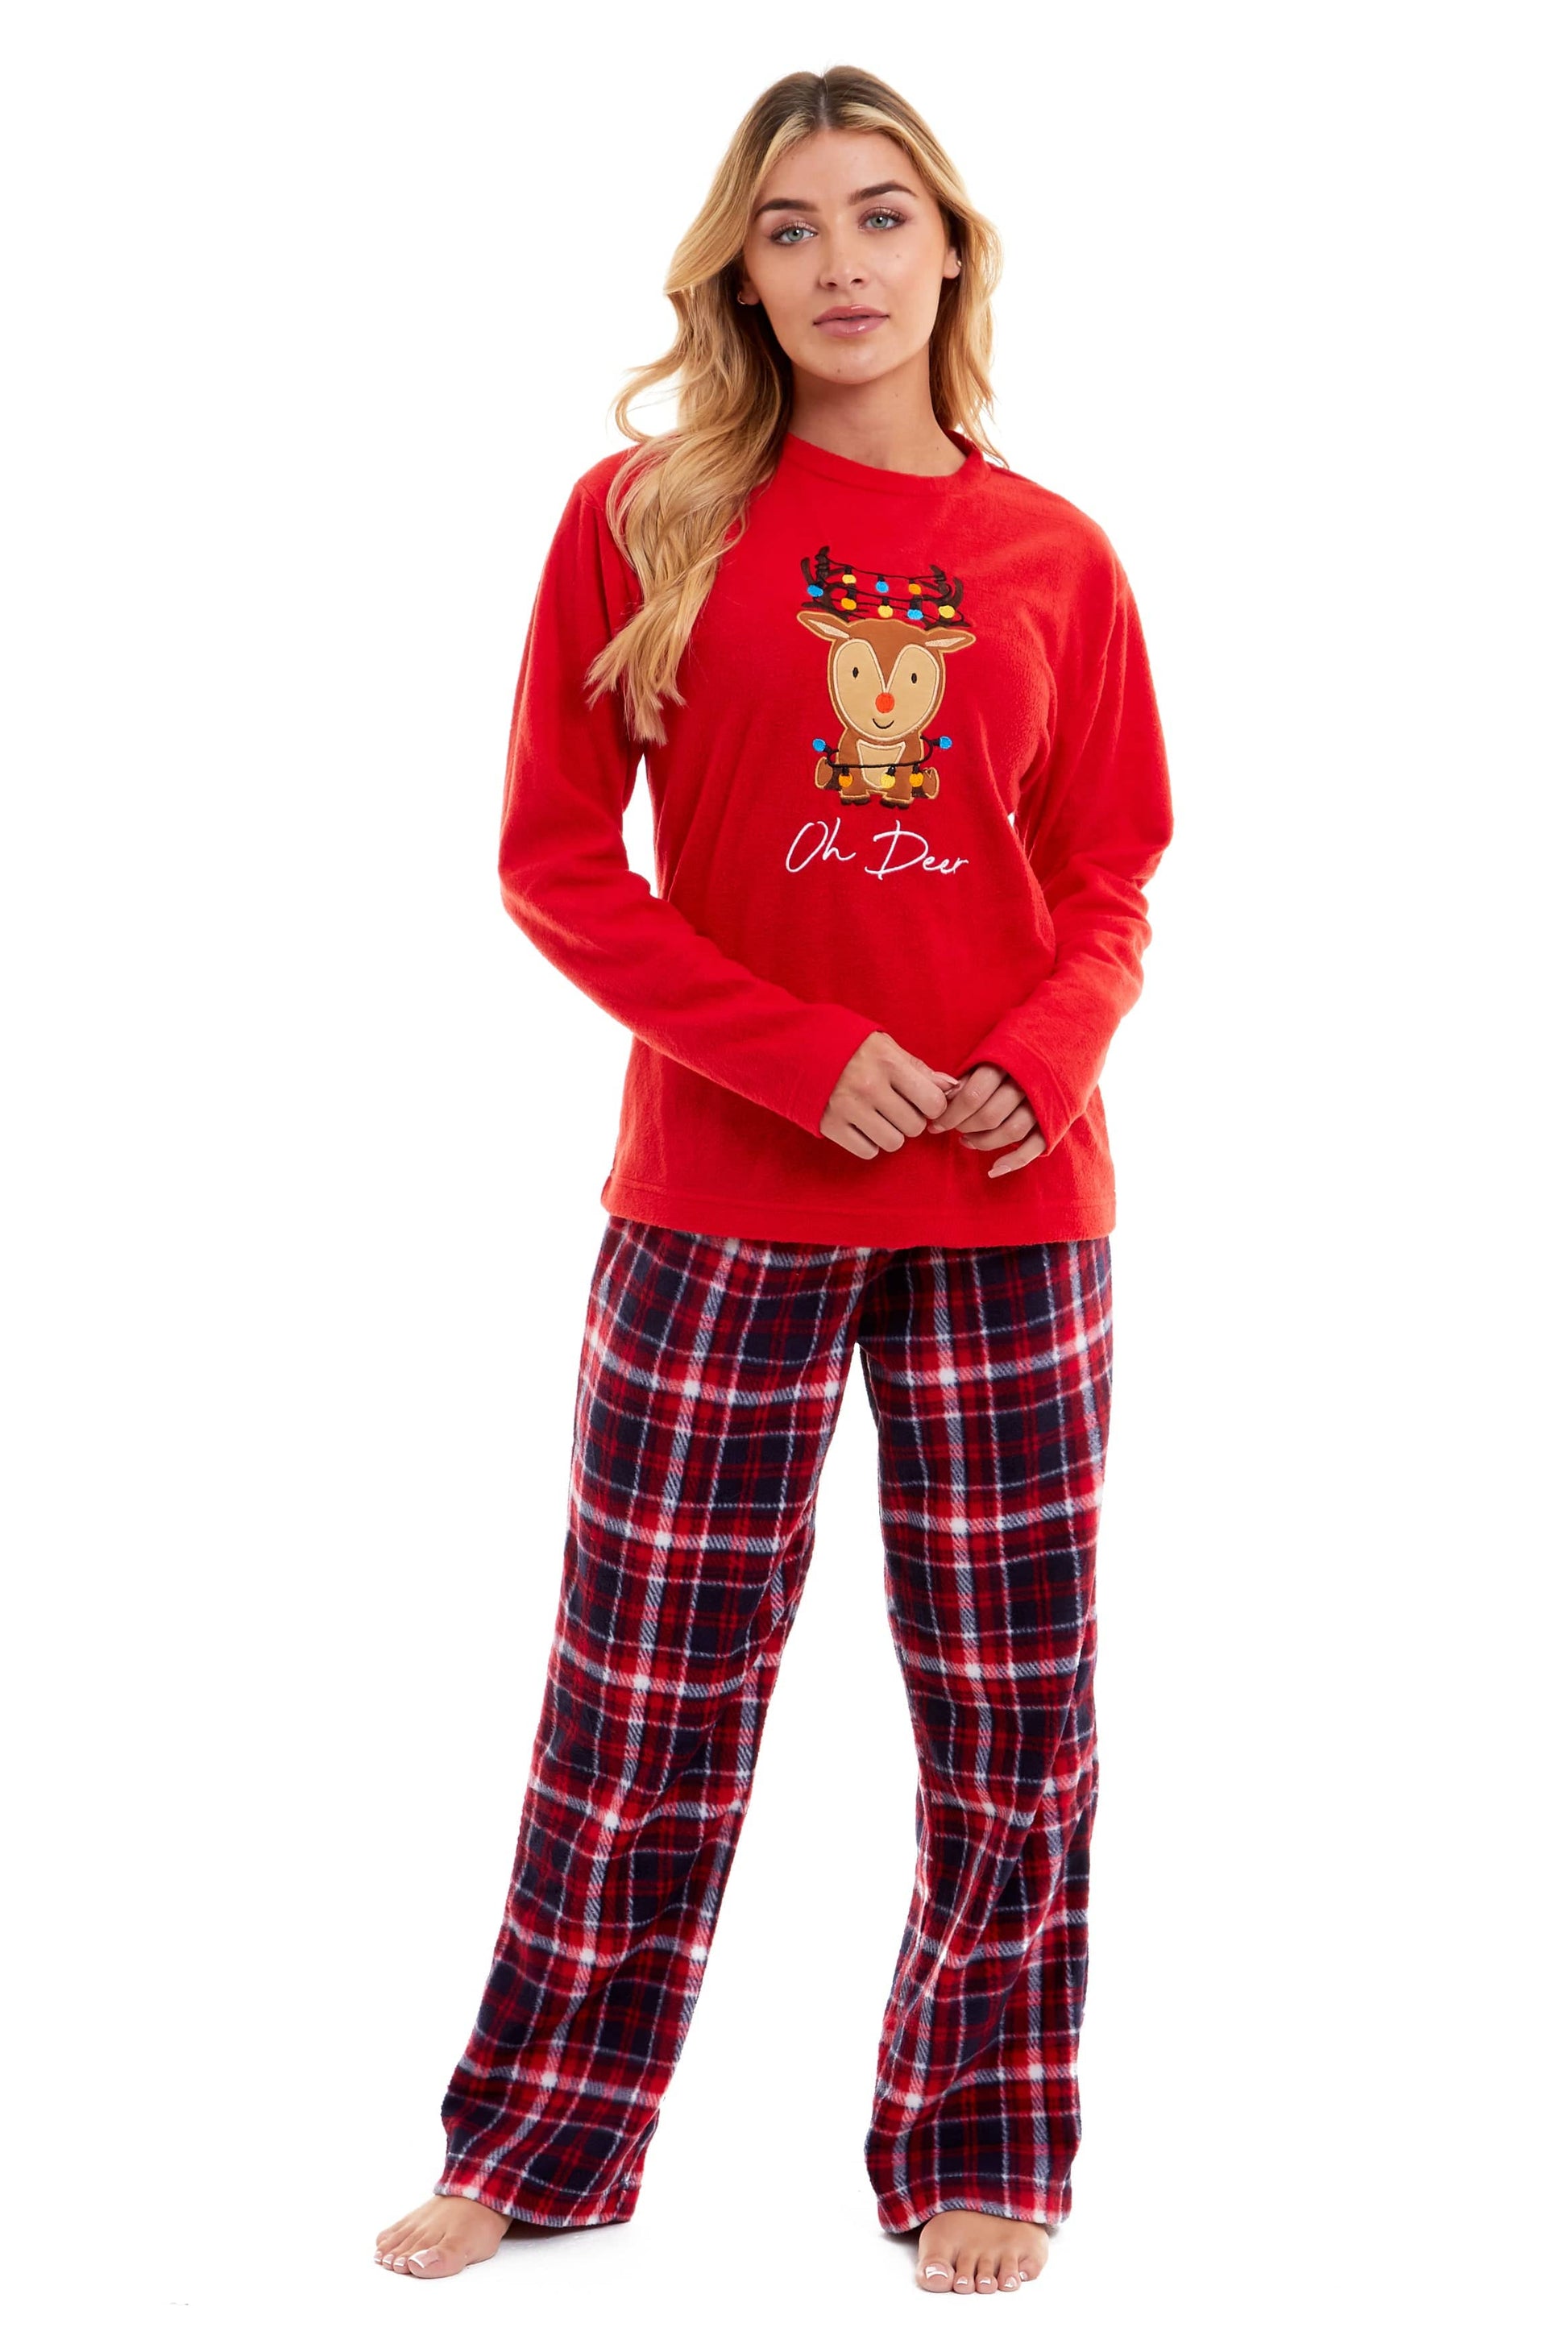 Women's Reindeer Polar Fleece Pyjama Set, Ladies PJ Christmas Gift